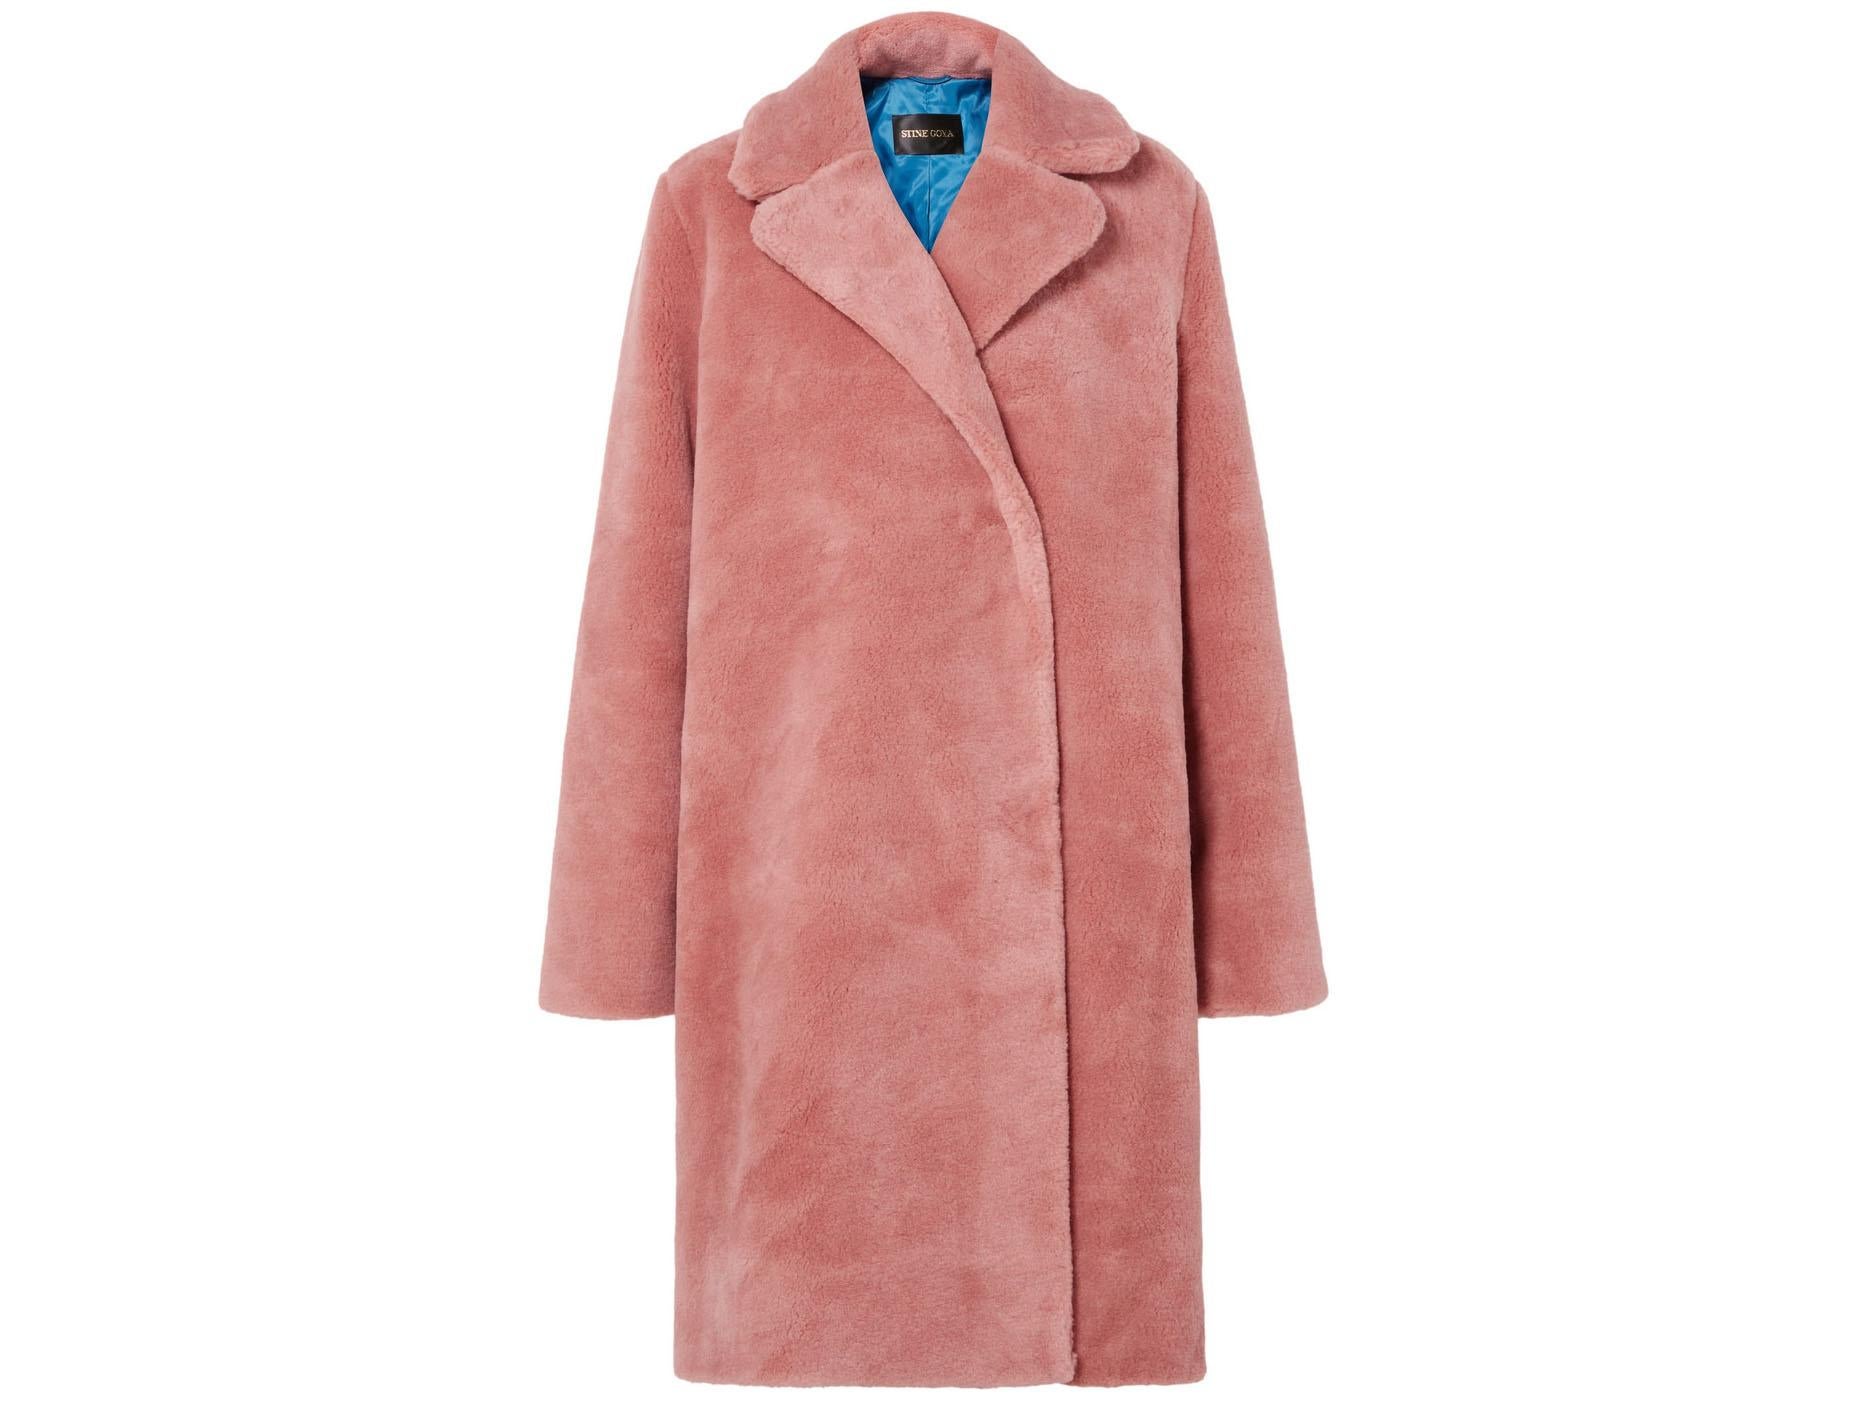 Stine Goya, Concord Faux Fur Coat, £350, Net-a-Porter